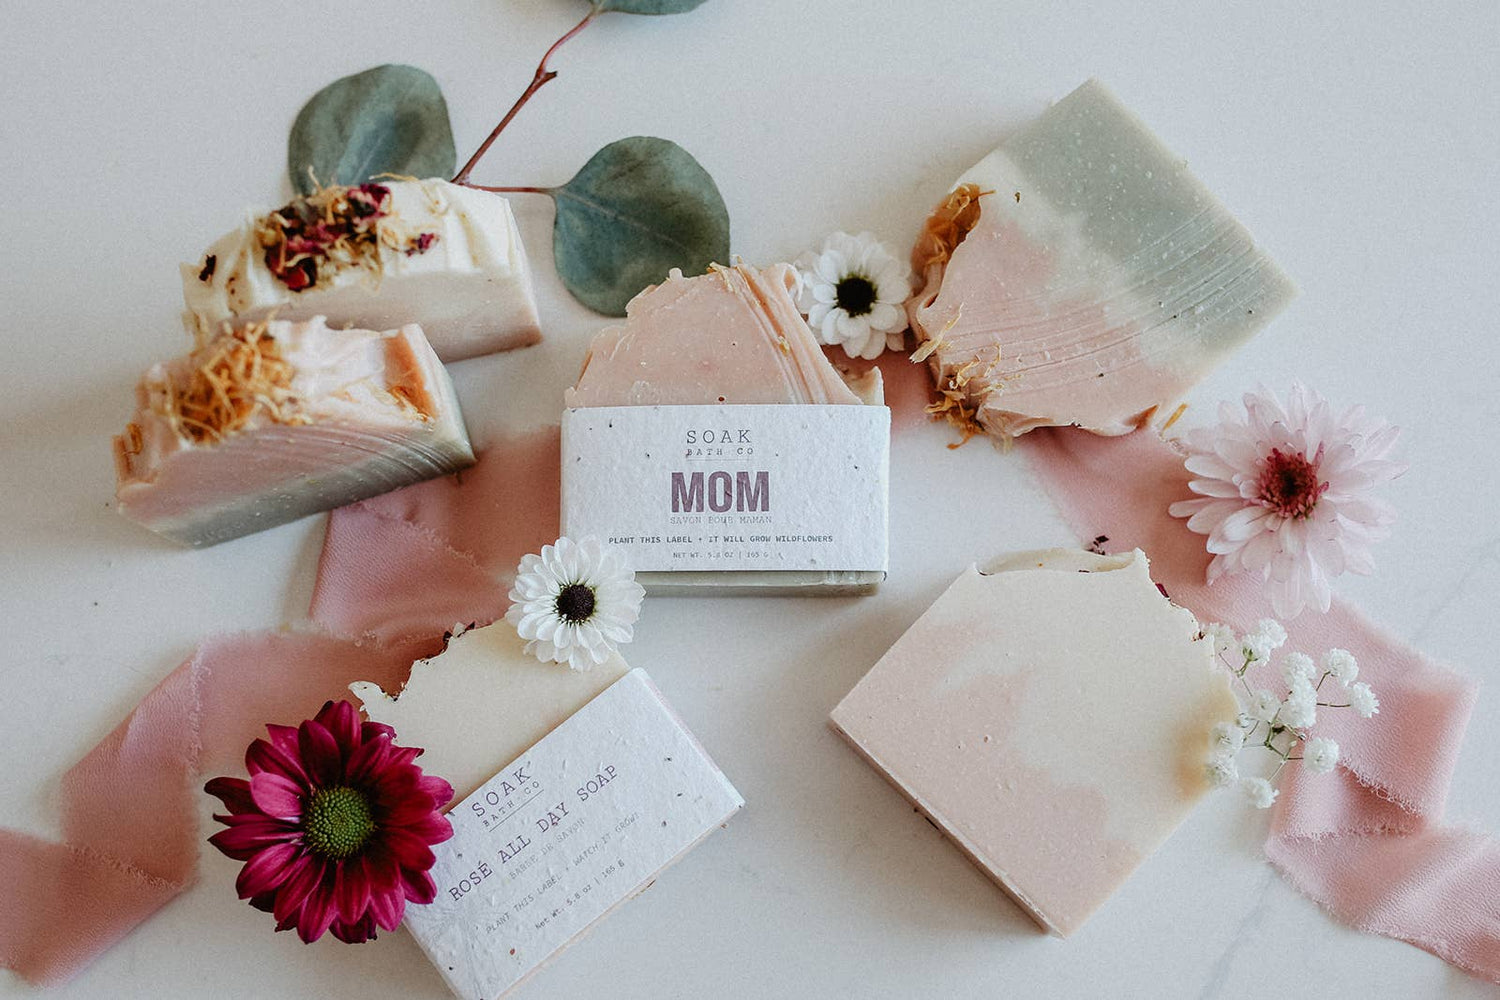 MOM Soap Bar [Handmade]